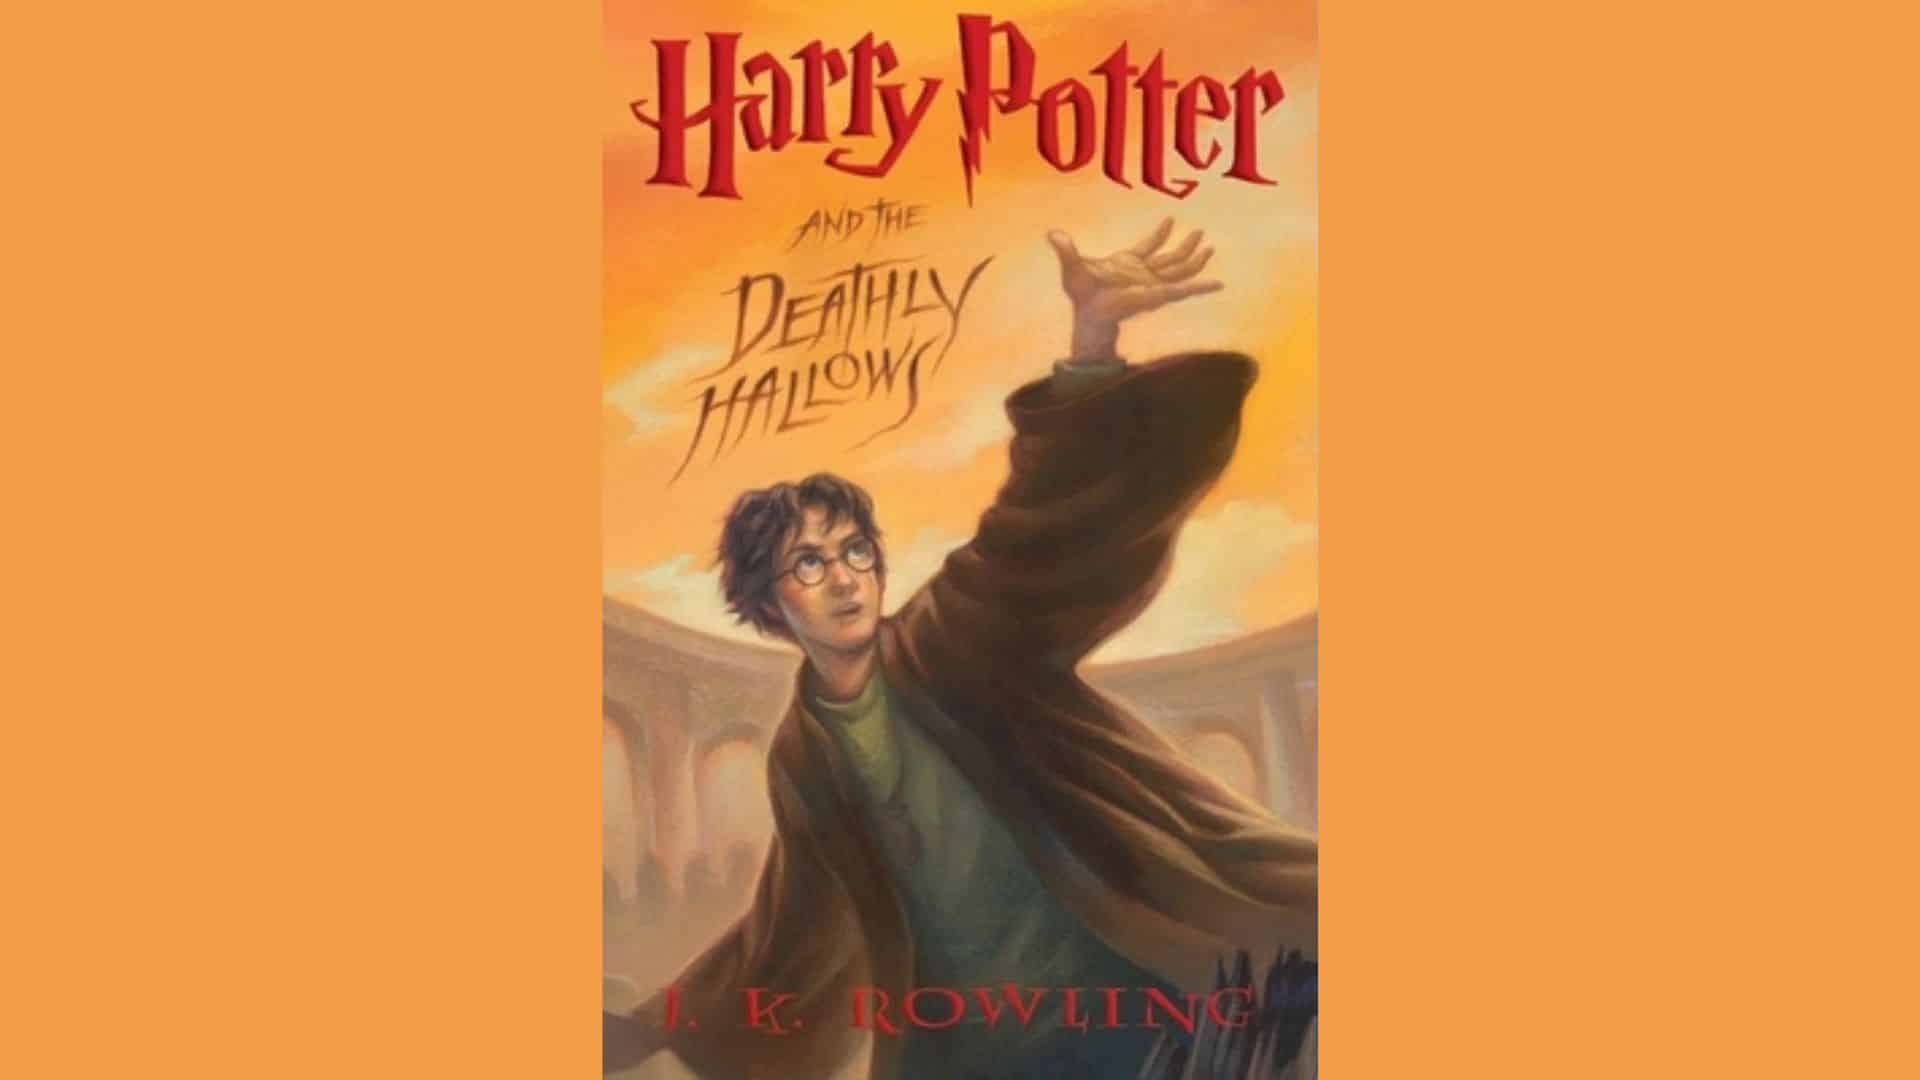 Harry Potter Series
